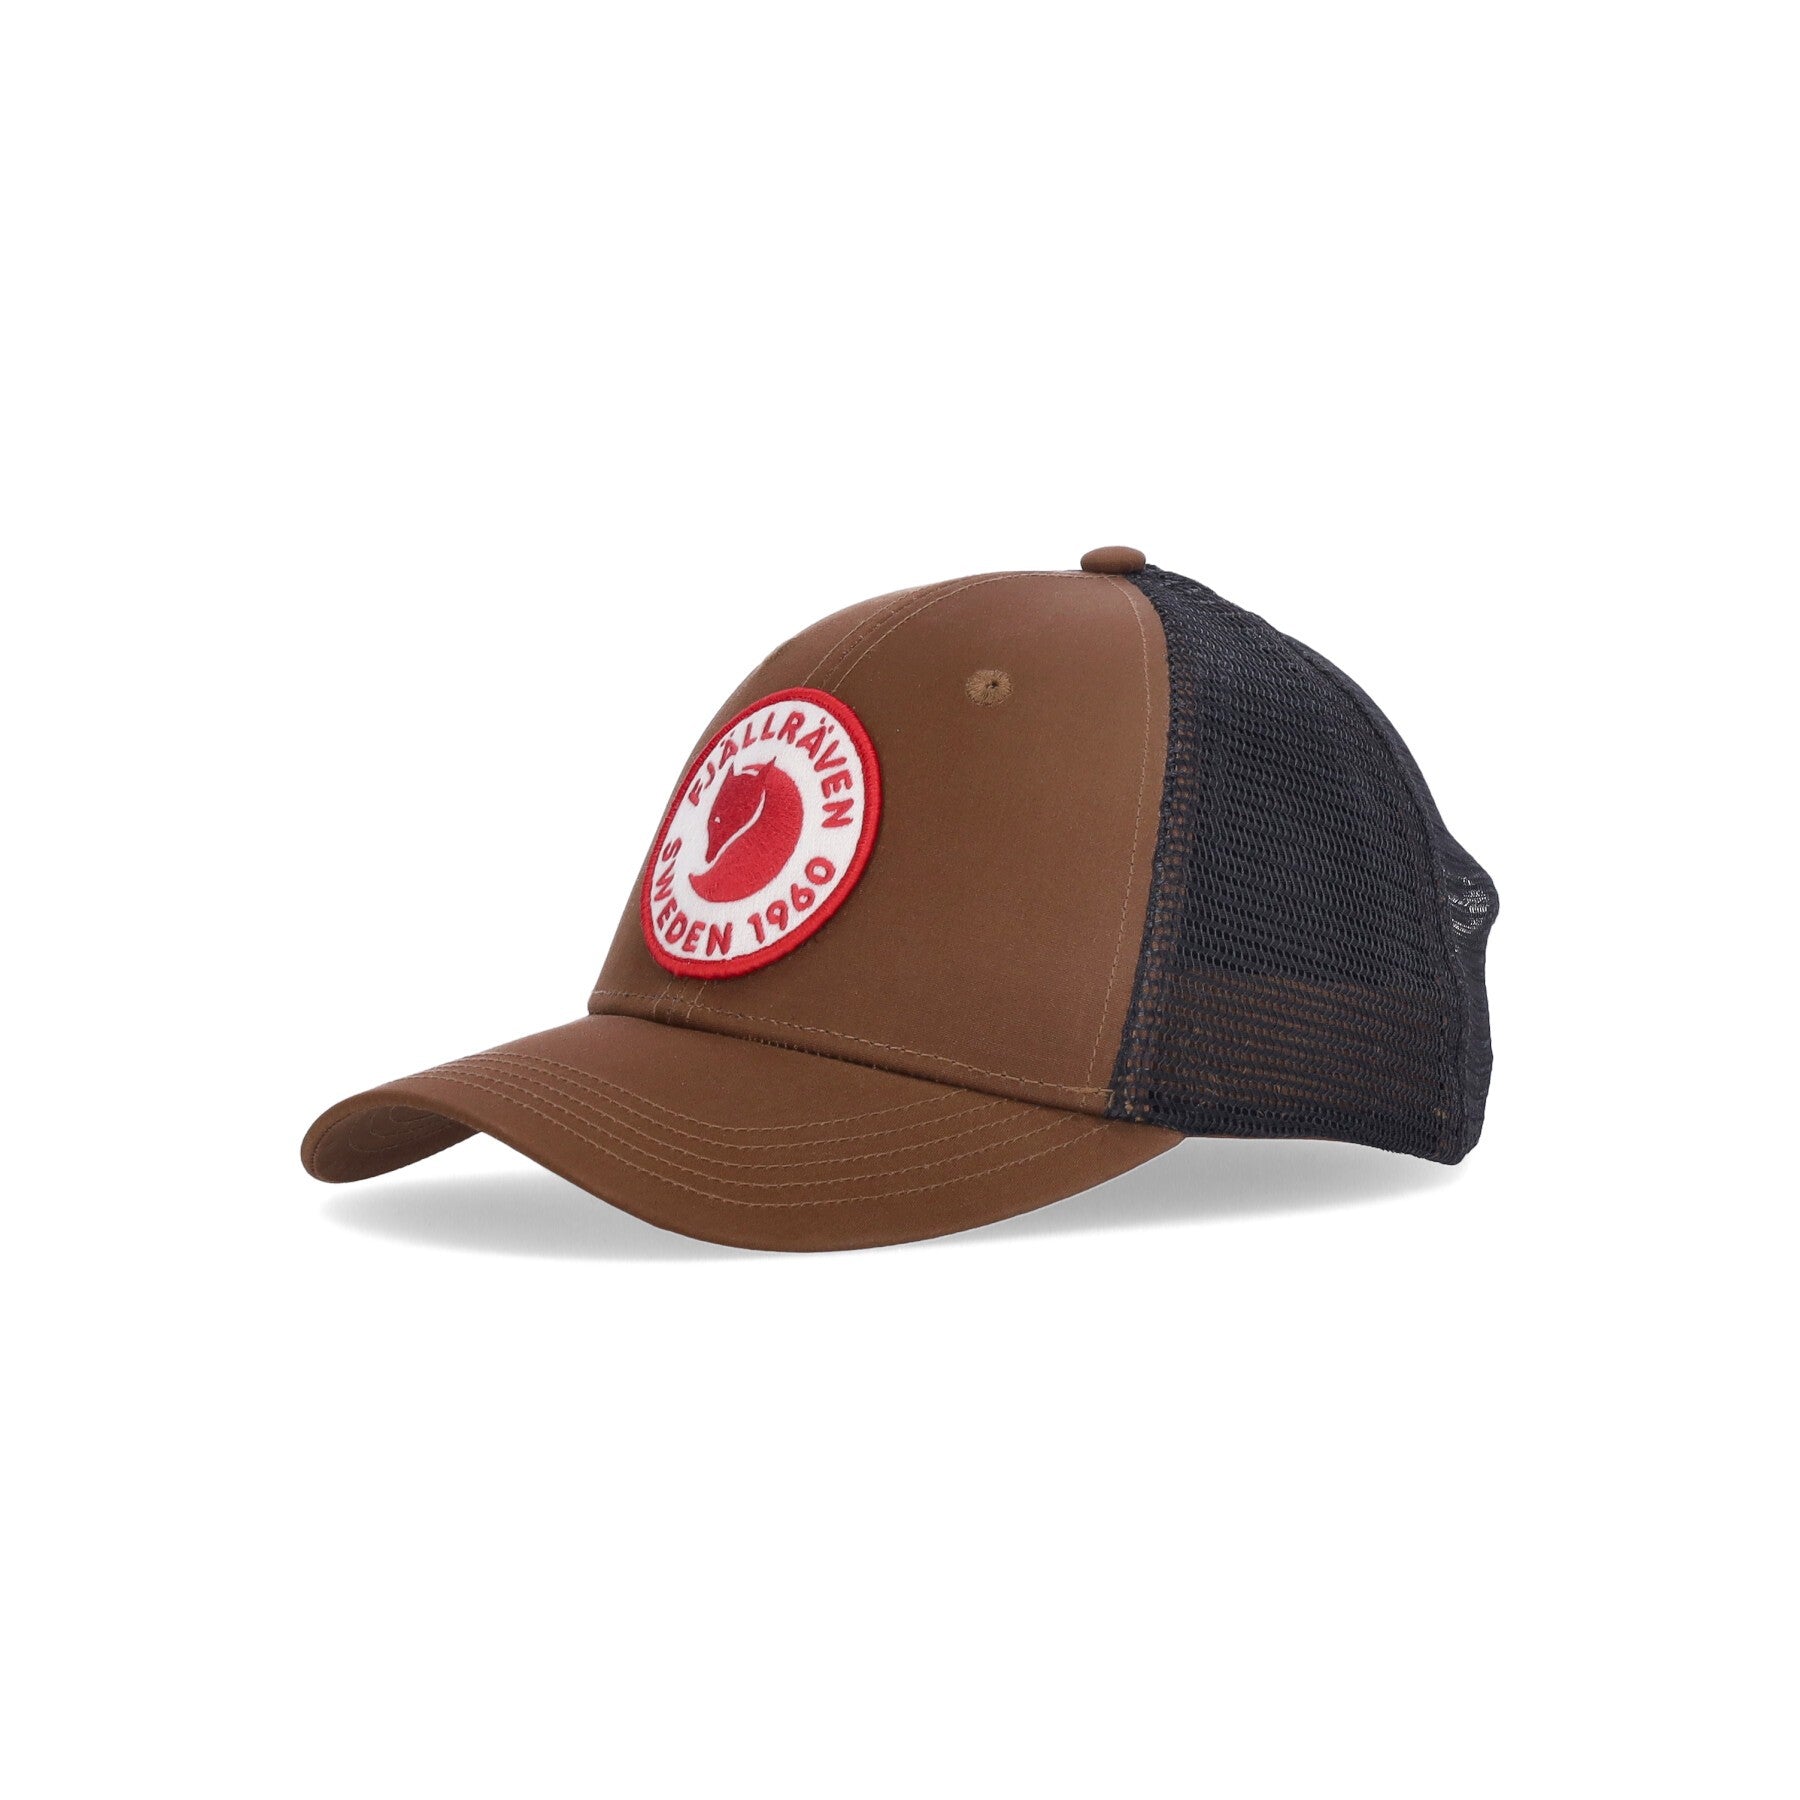 Curved Visor Cap for Men with Langtradarkeps Timber Brown Logo